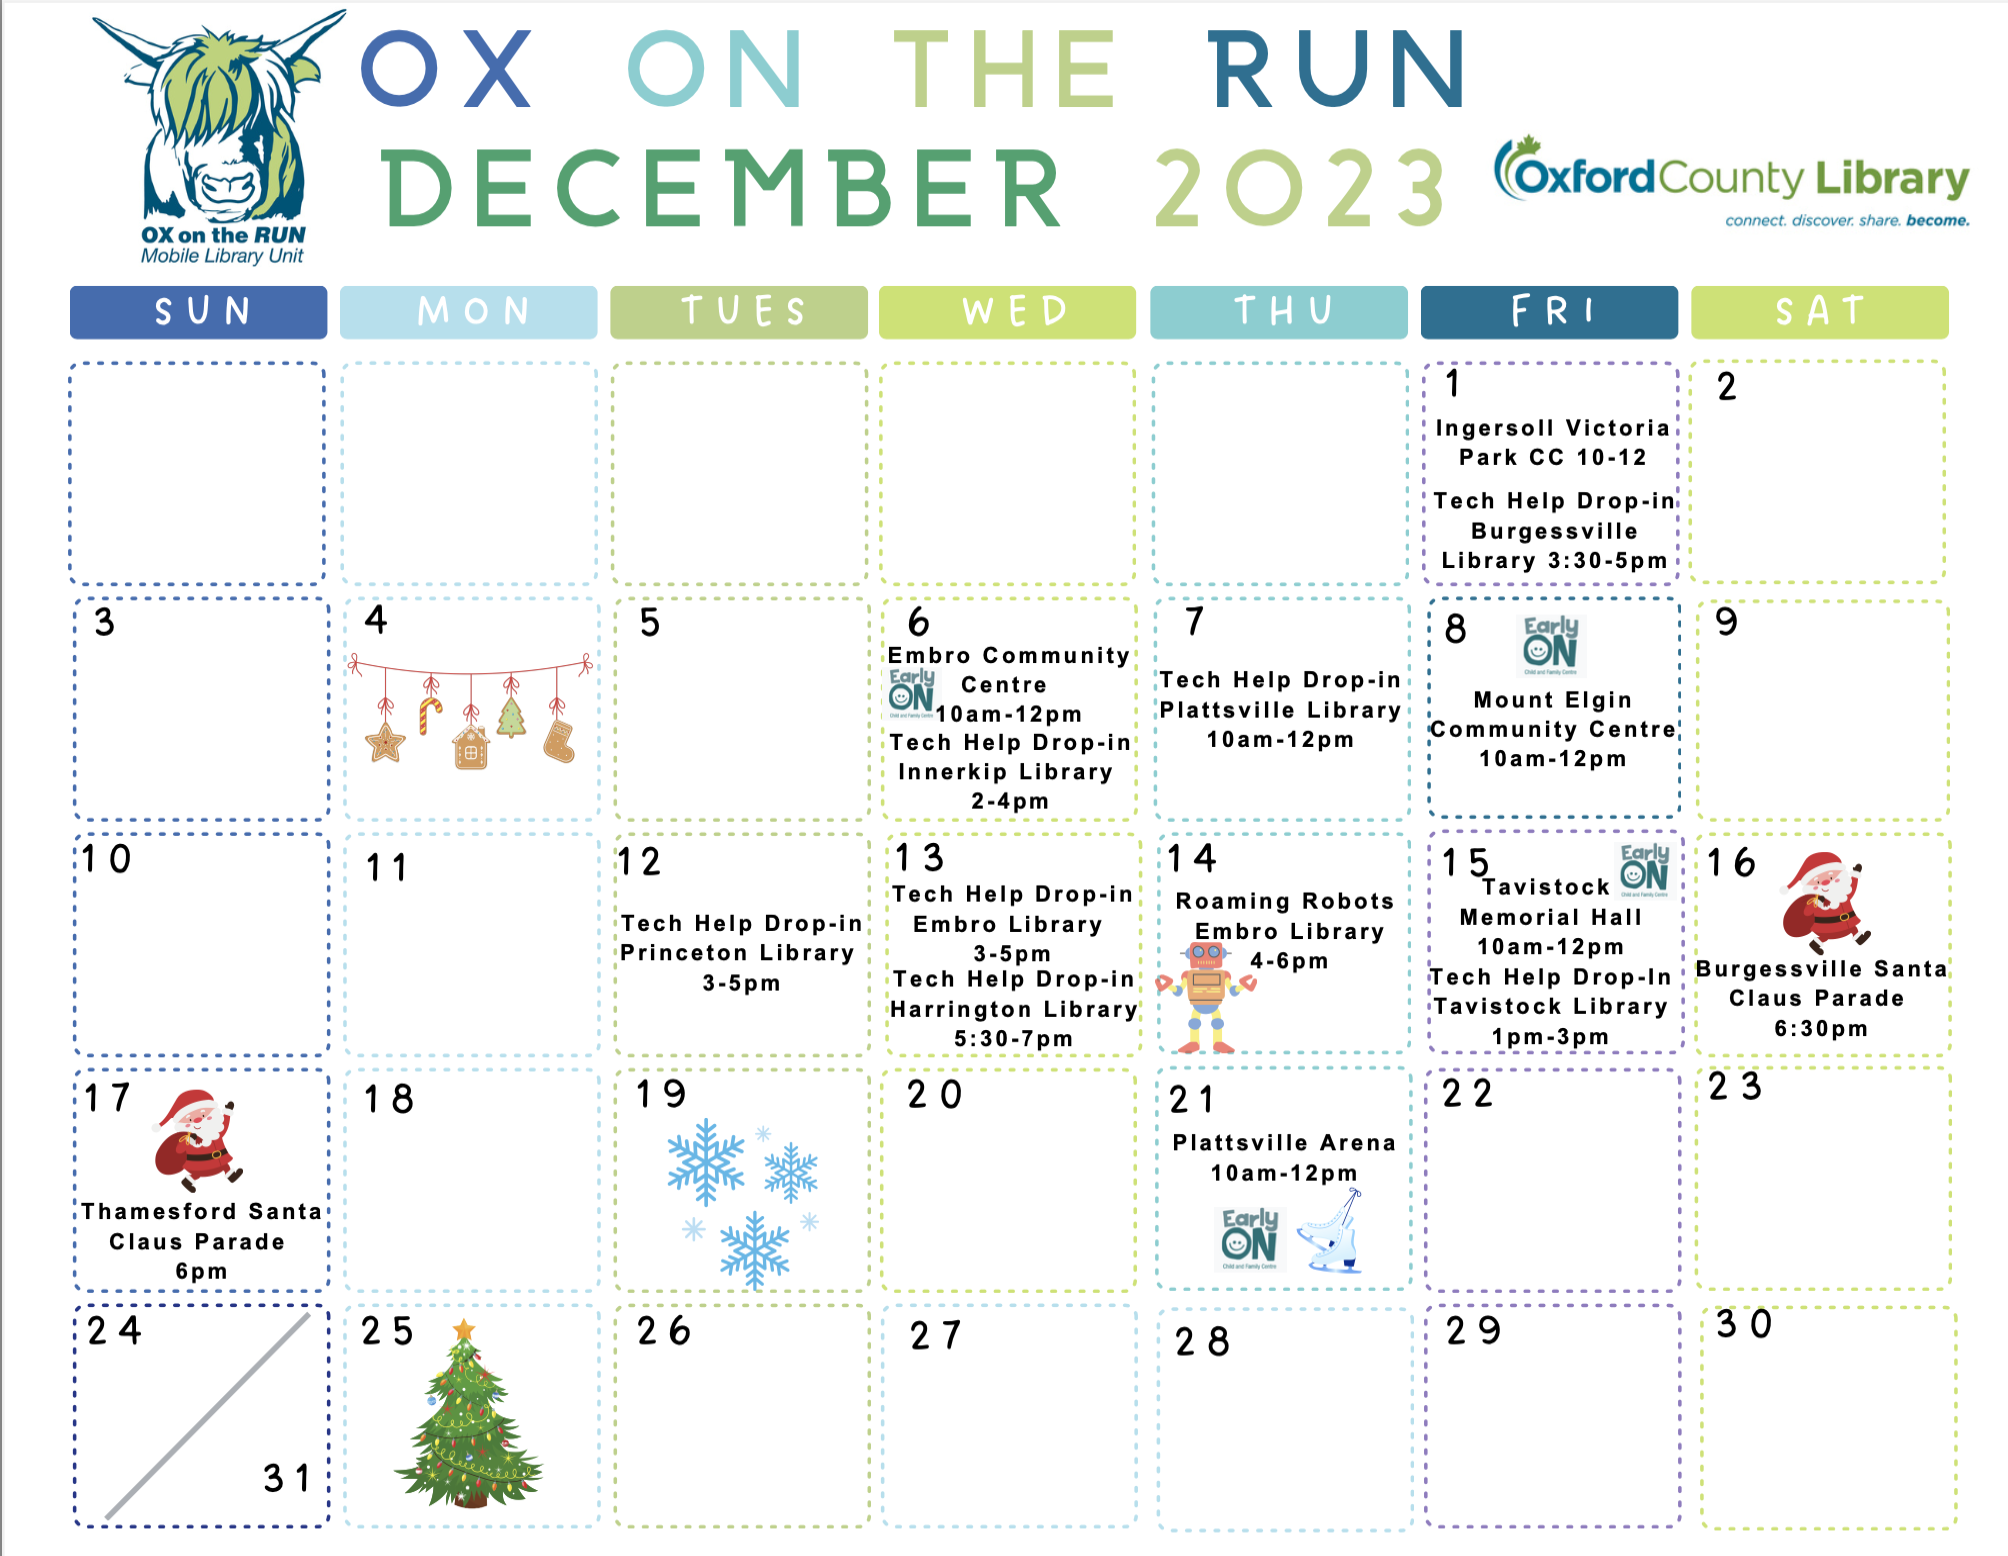 Ox on the Run December 2023 calendar of events